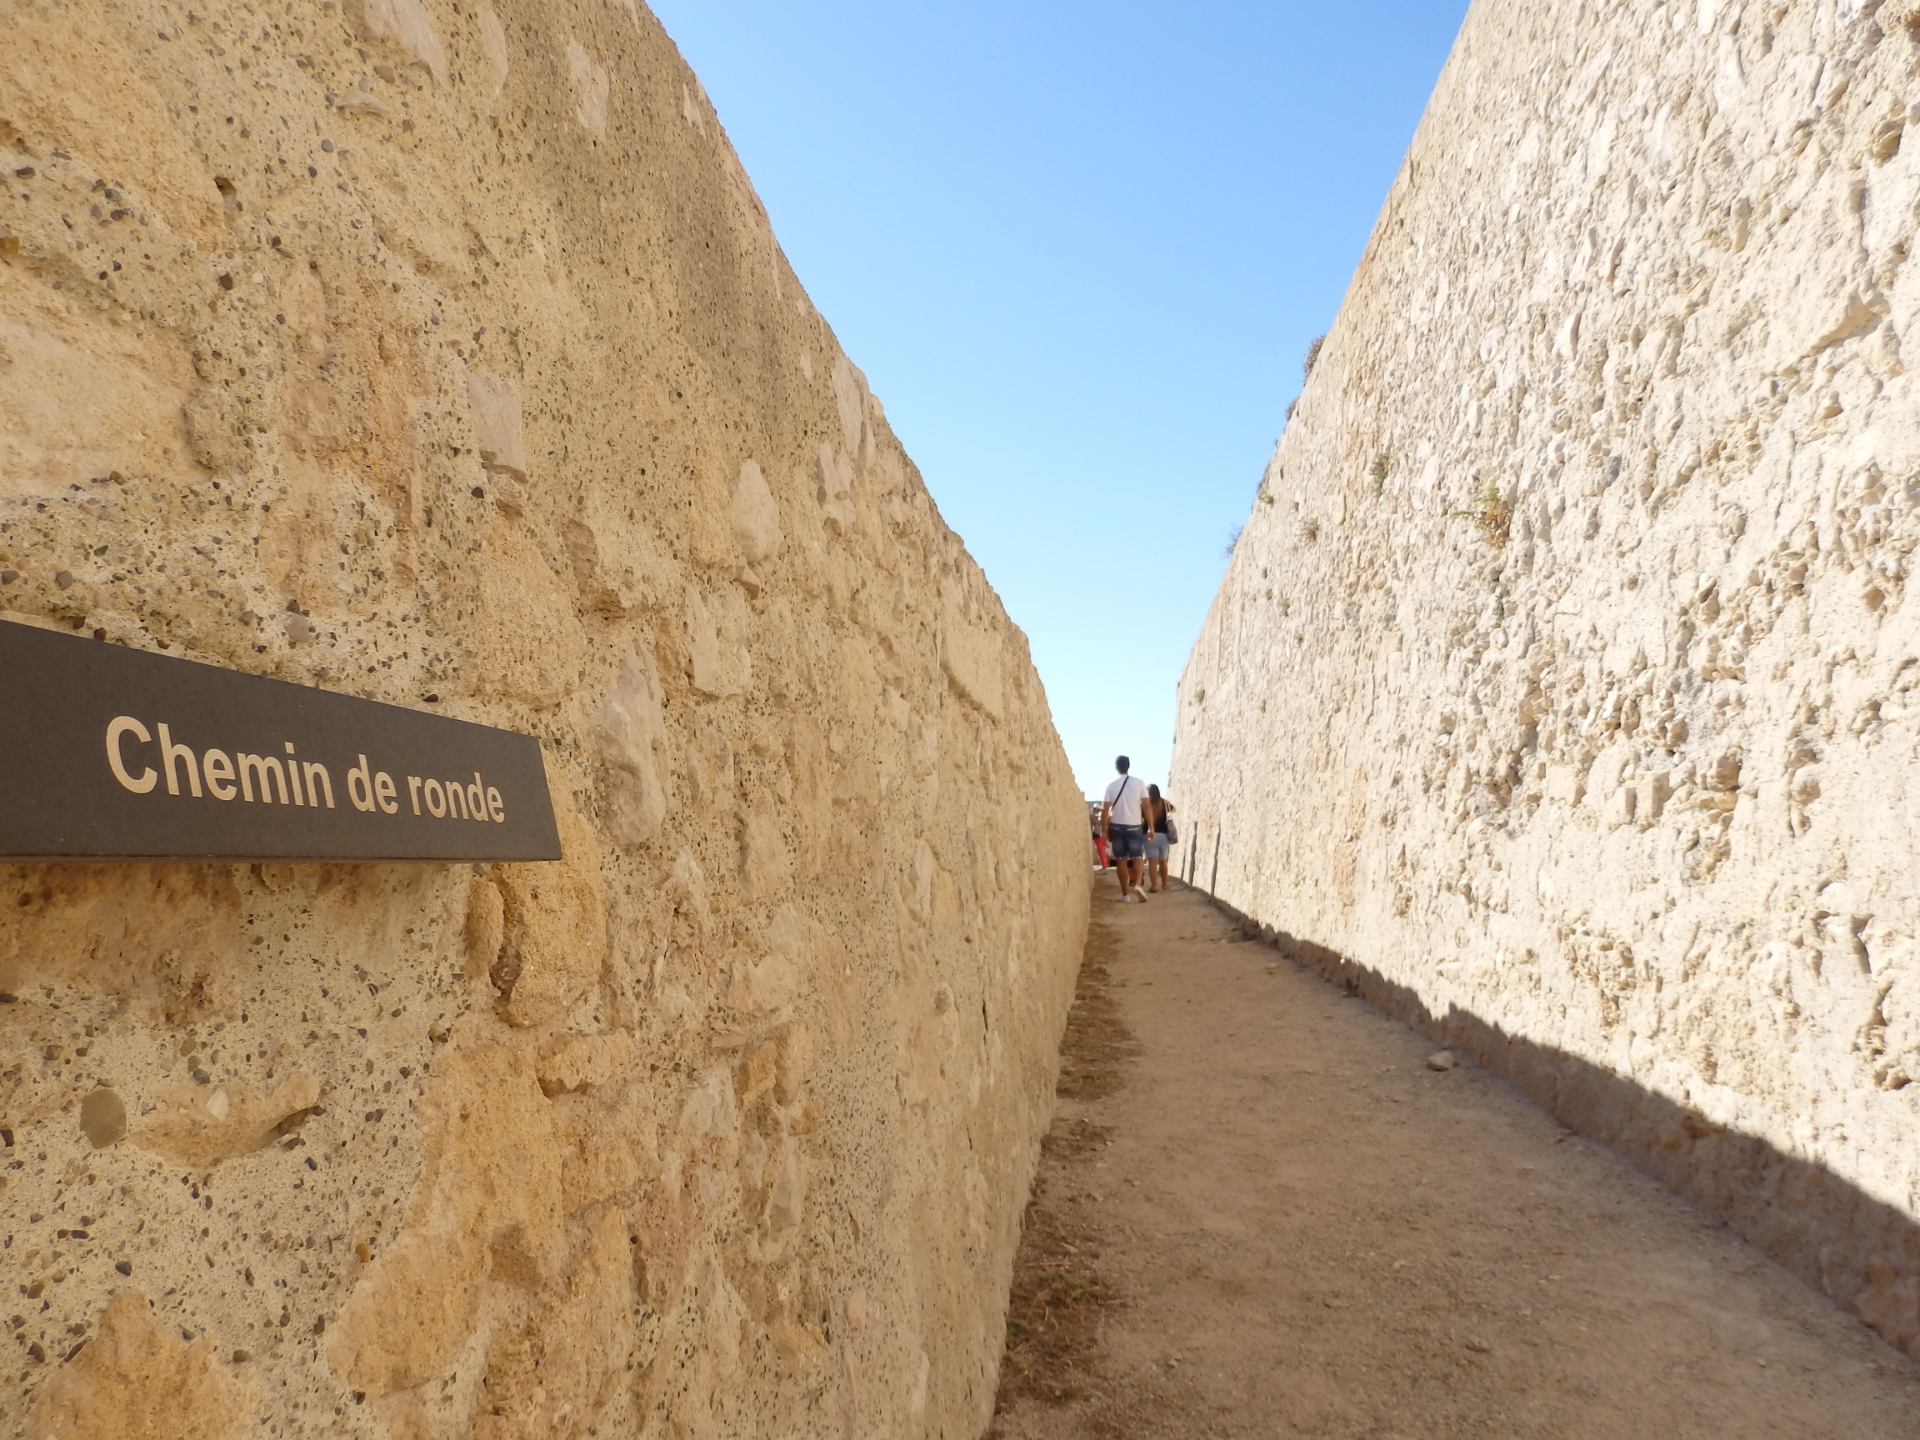 Round path of Fort de Bouc - © Otmartigues / KarimK